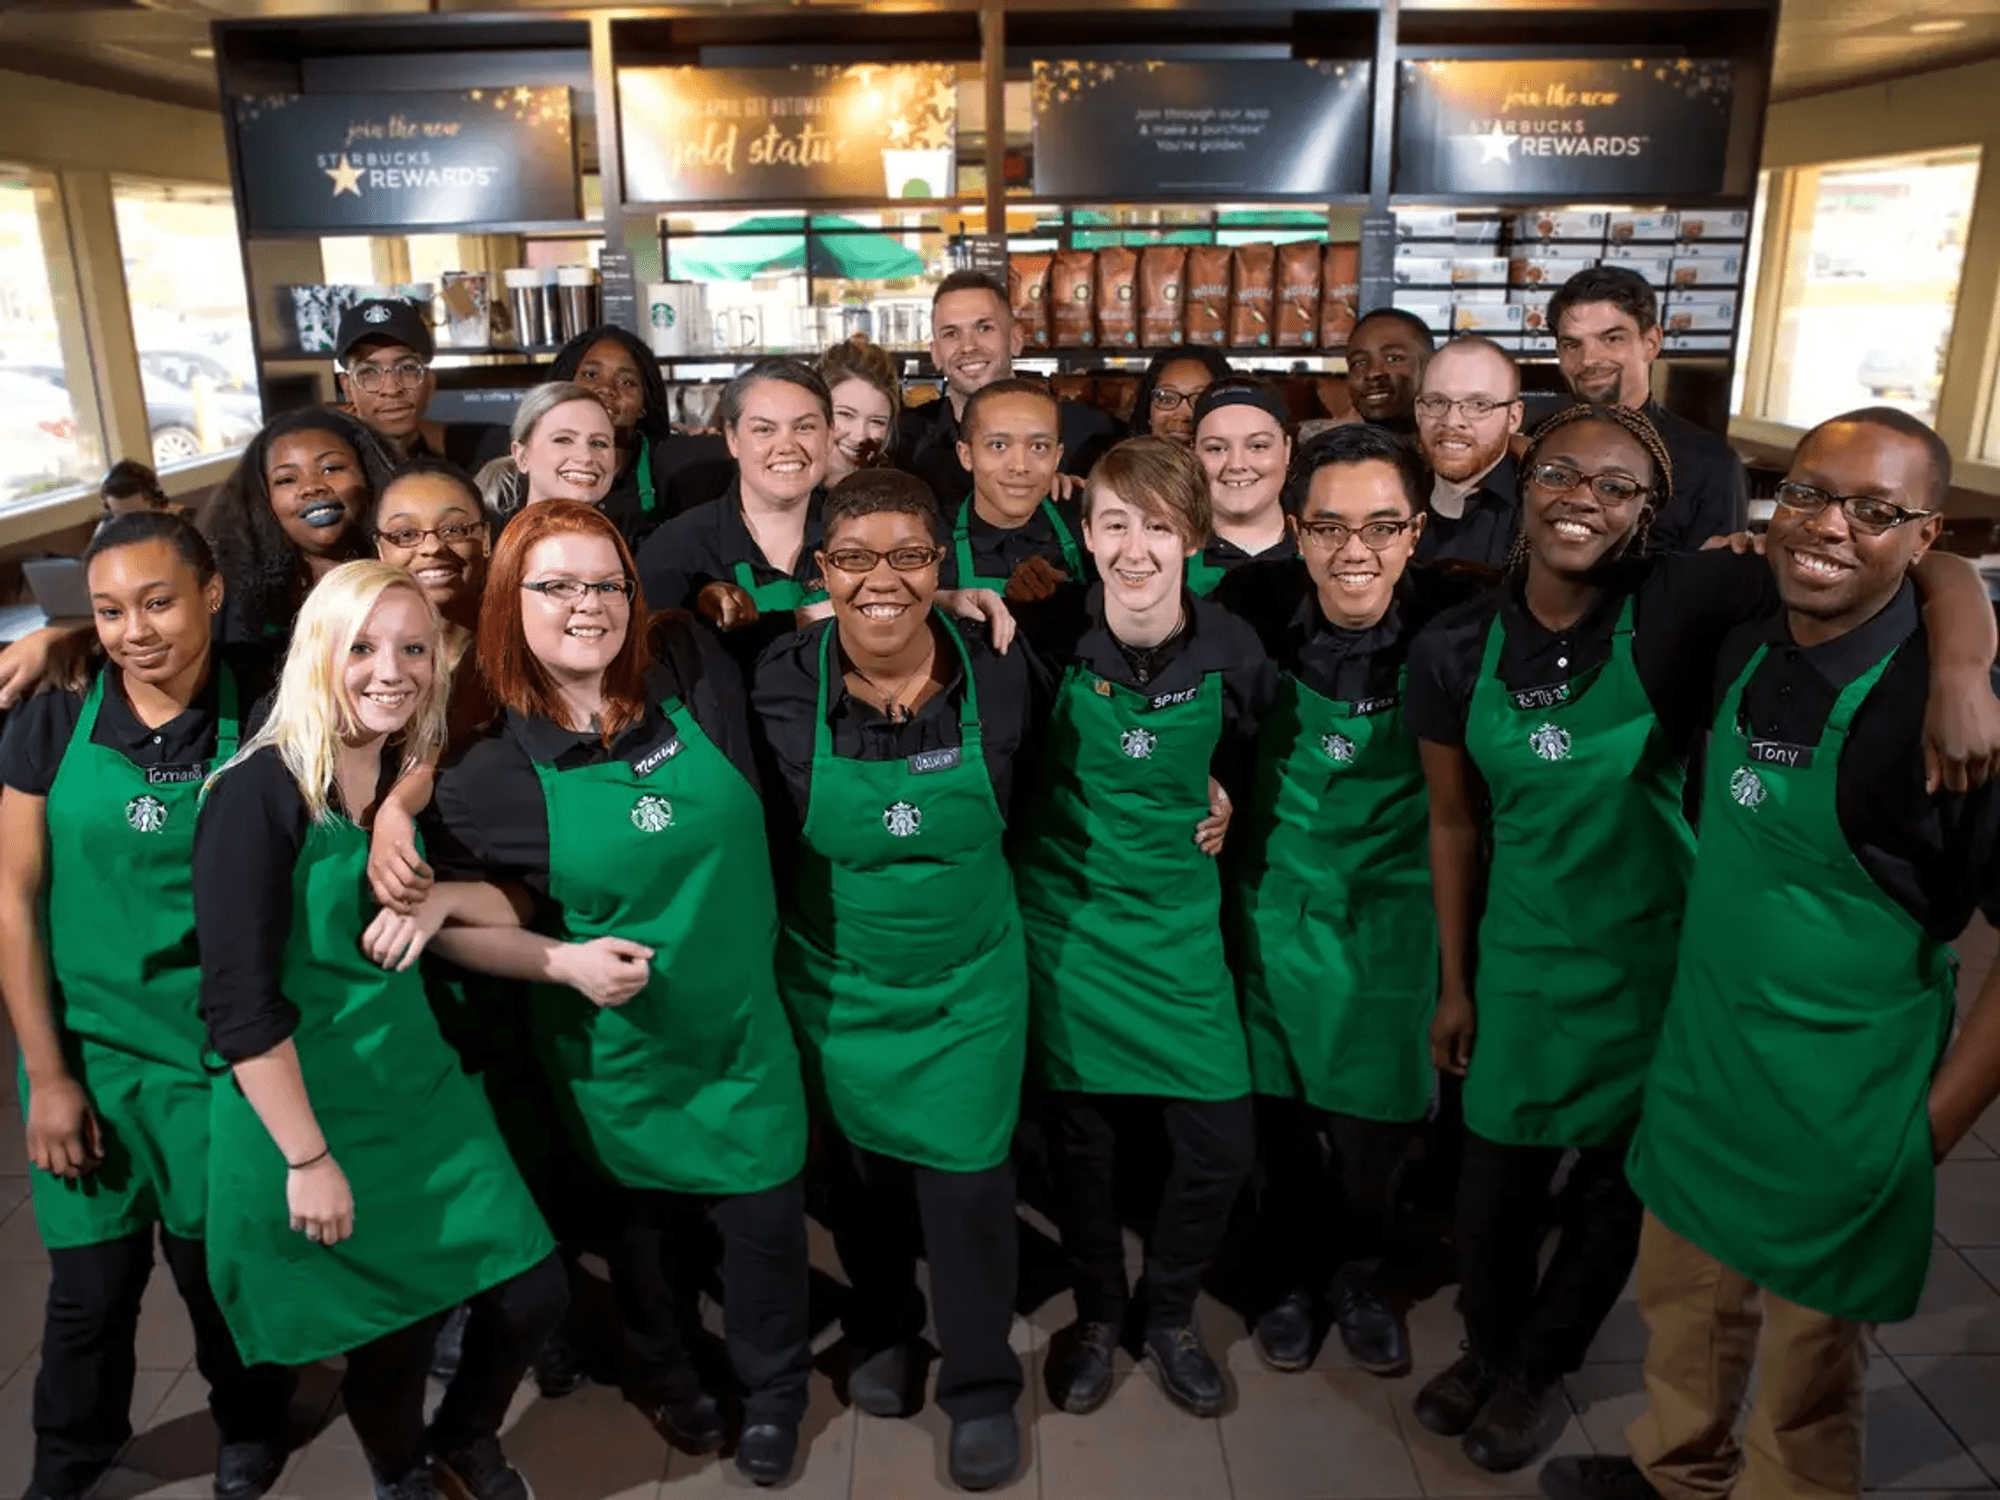 Starbucks employees